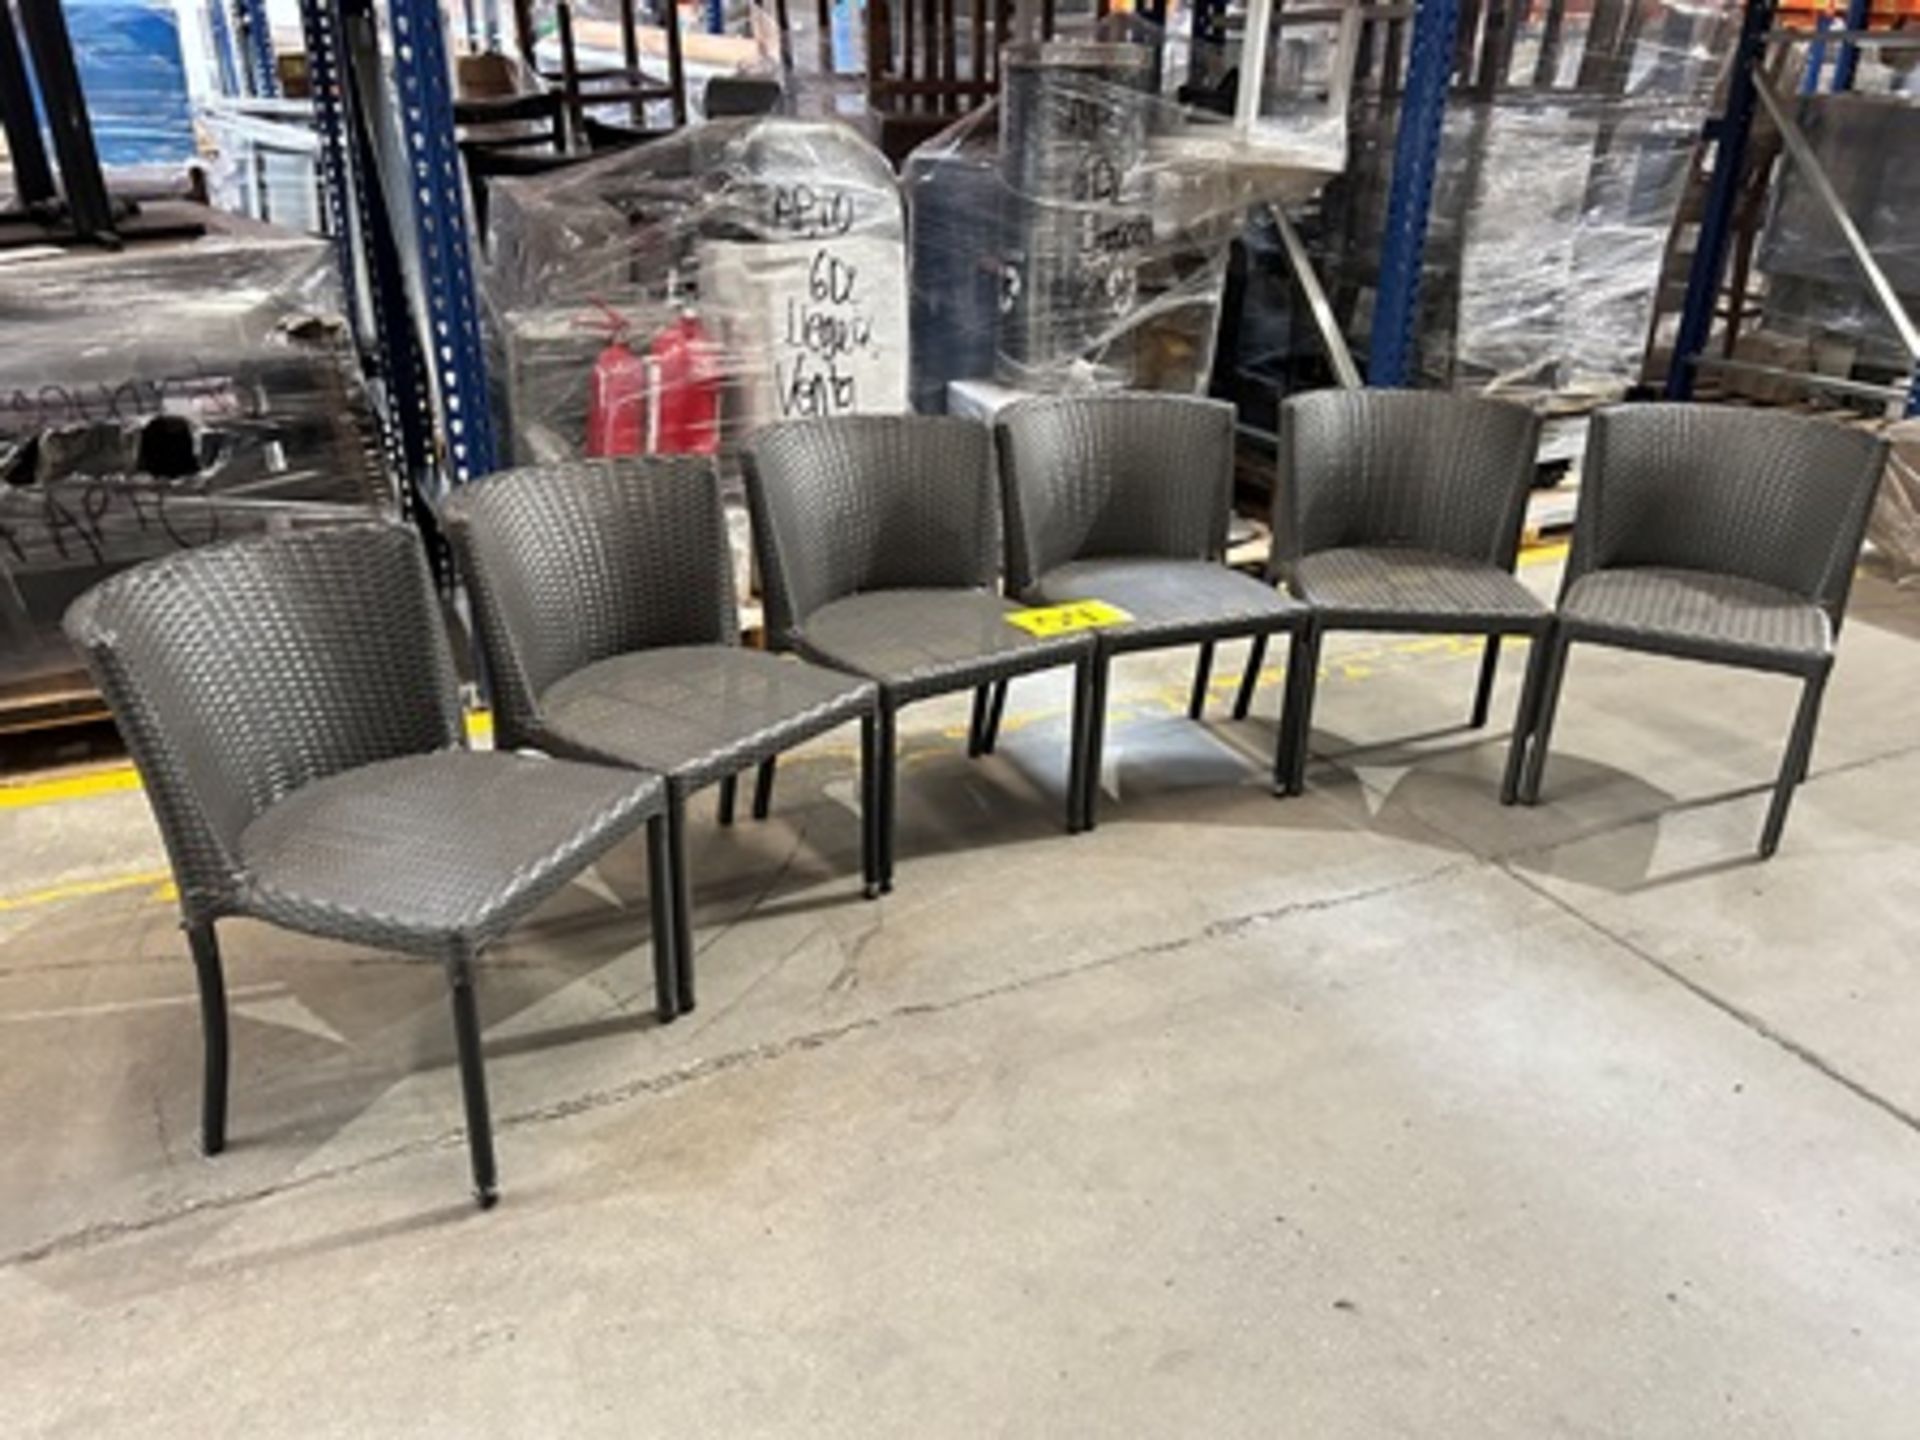 6 sillas de ratán respaldo curvo para exterior Color Café Medidas 55 cm x 62 cm x 74 cm (Equipo Usa - Image 5 of 10